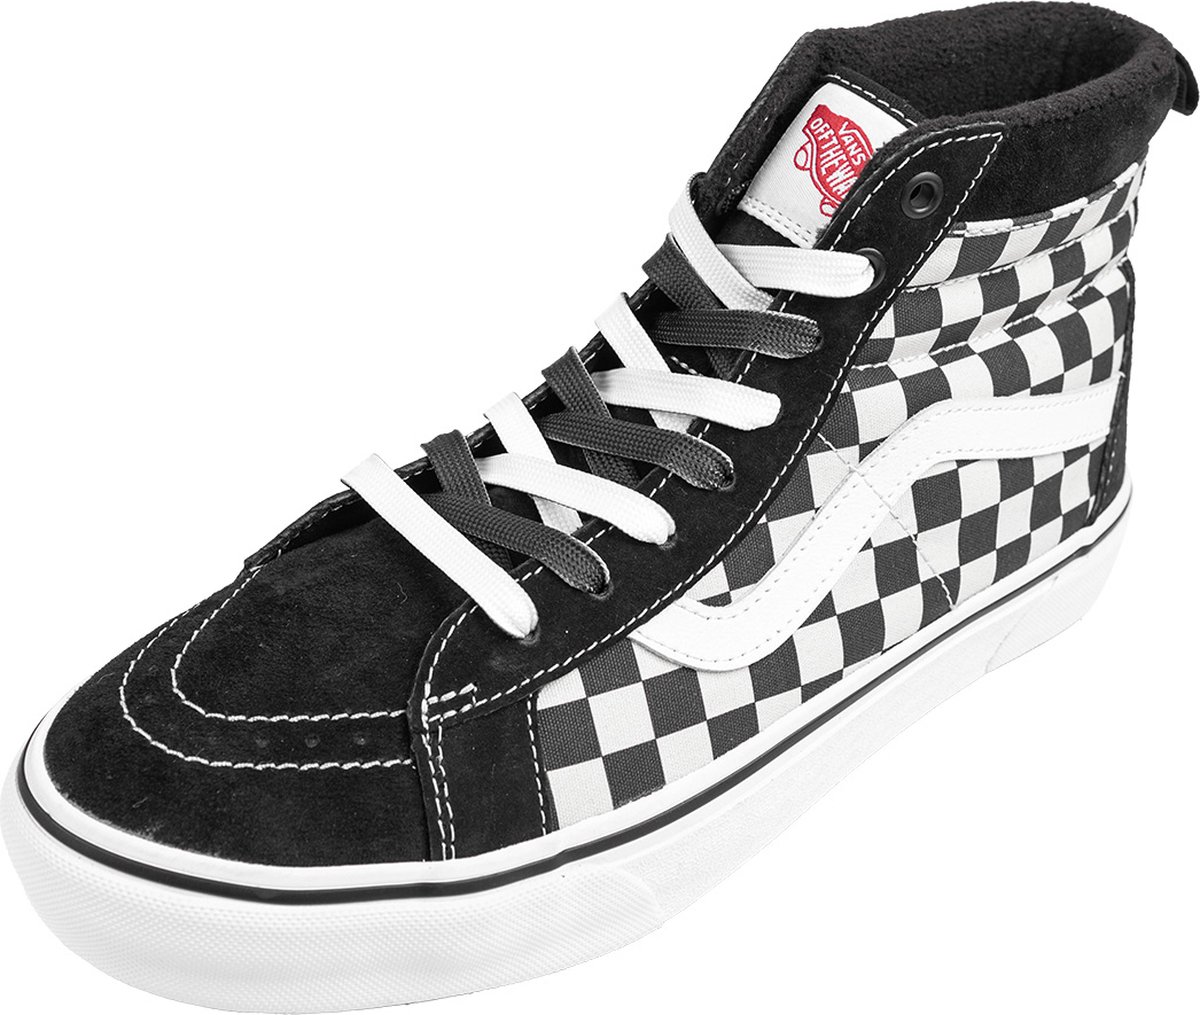 Sneakerveters | Platte schoenveters | dubbele kleur | polyester | zwart wit | 100 cm